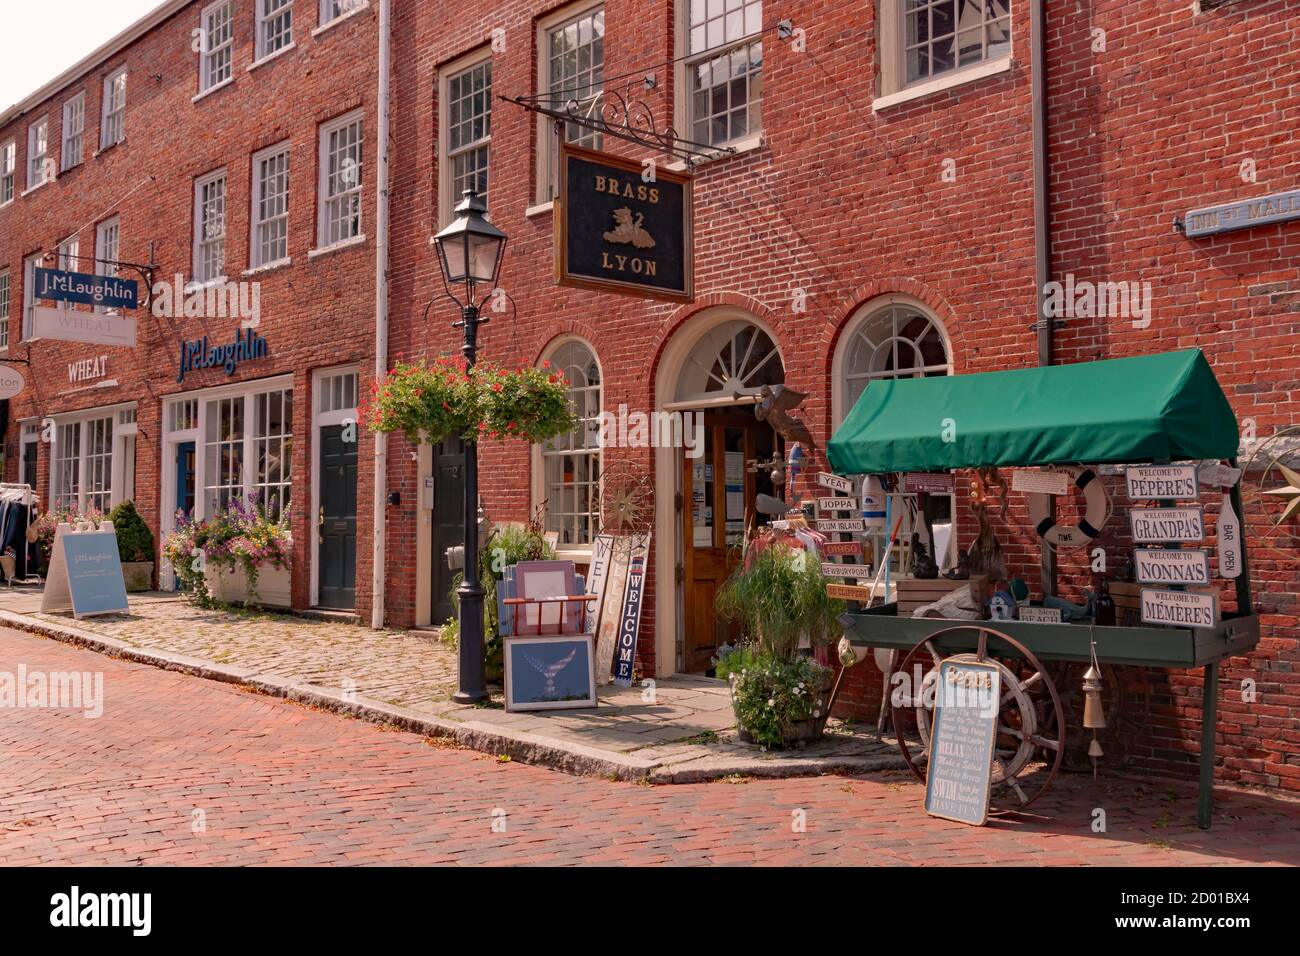 Brass Lyon Gift Shop,in downtown historic Market Square, Newburyport, Massachusetts. Stock Photo